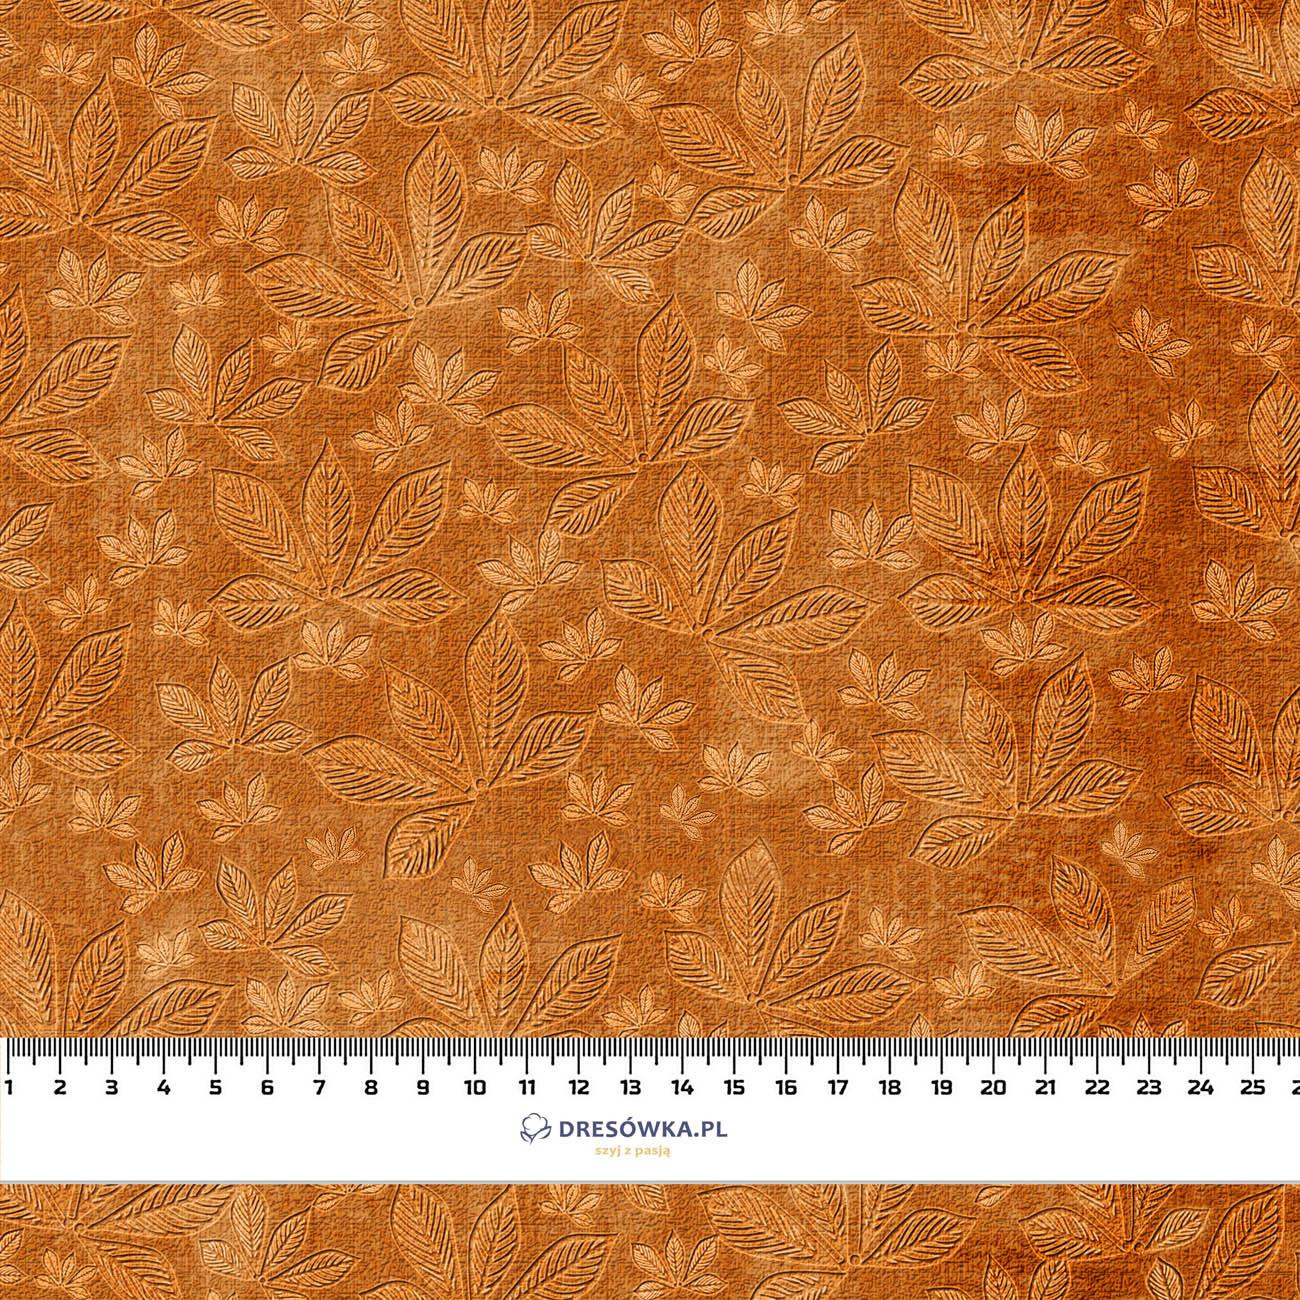 CHESTNUT LEAVES Ms.2 / orange (AUTUMN COLORS) - Waterproof woven fabric